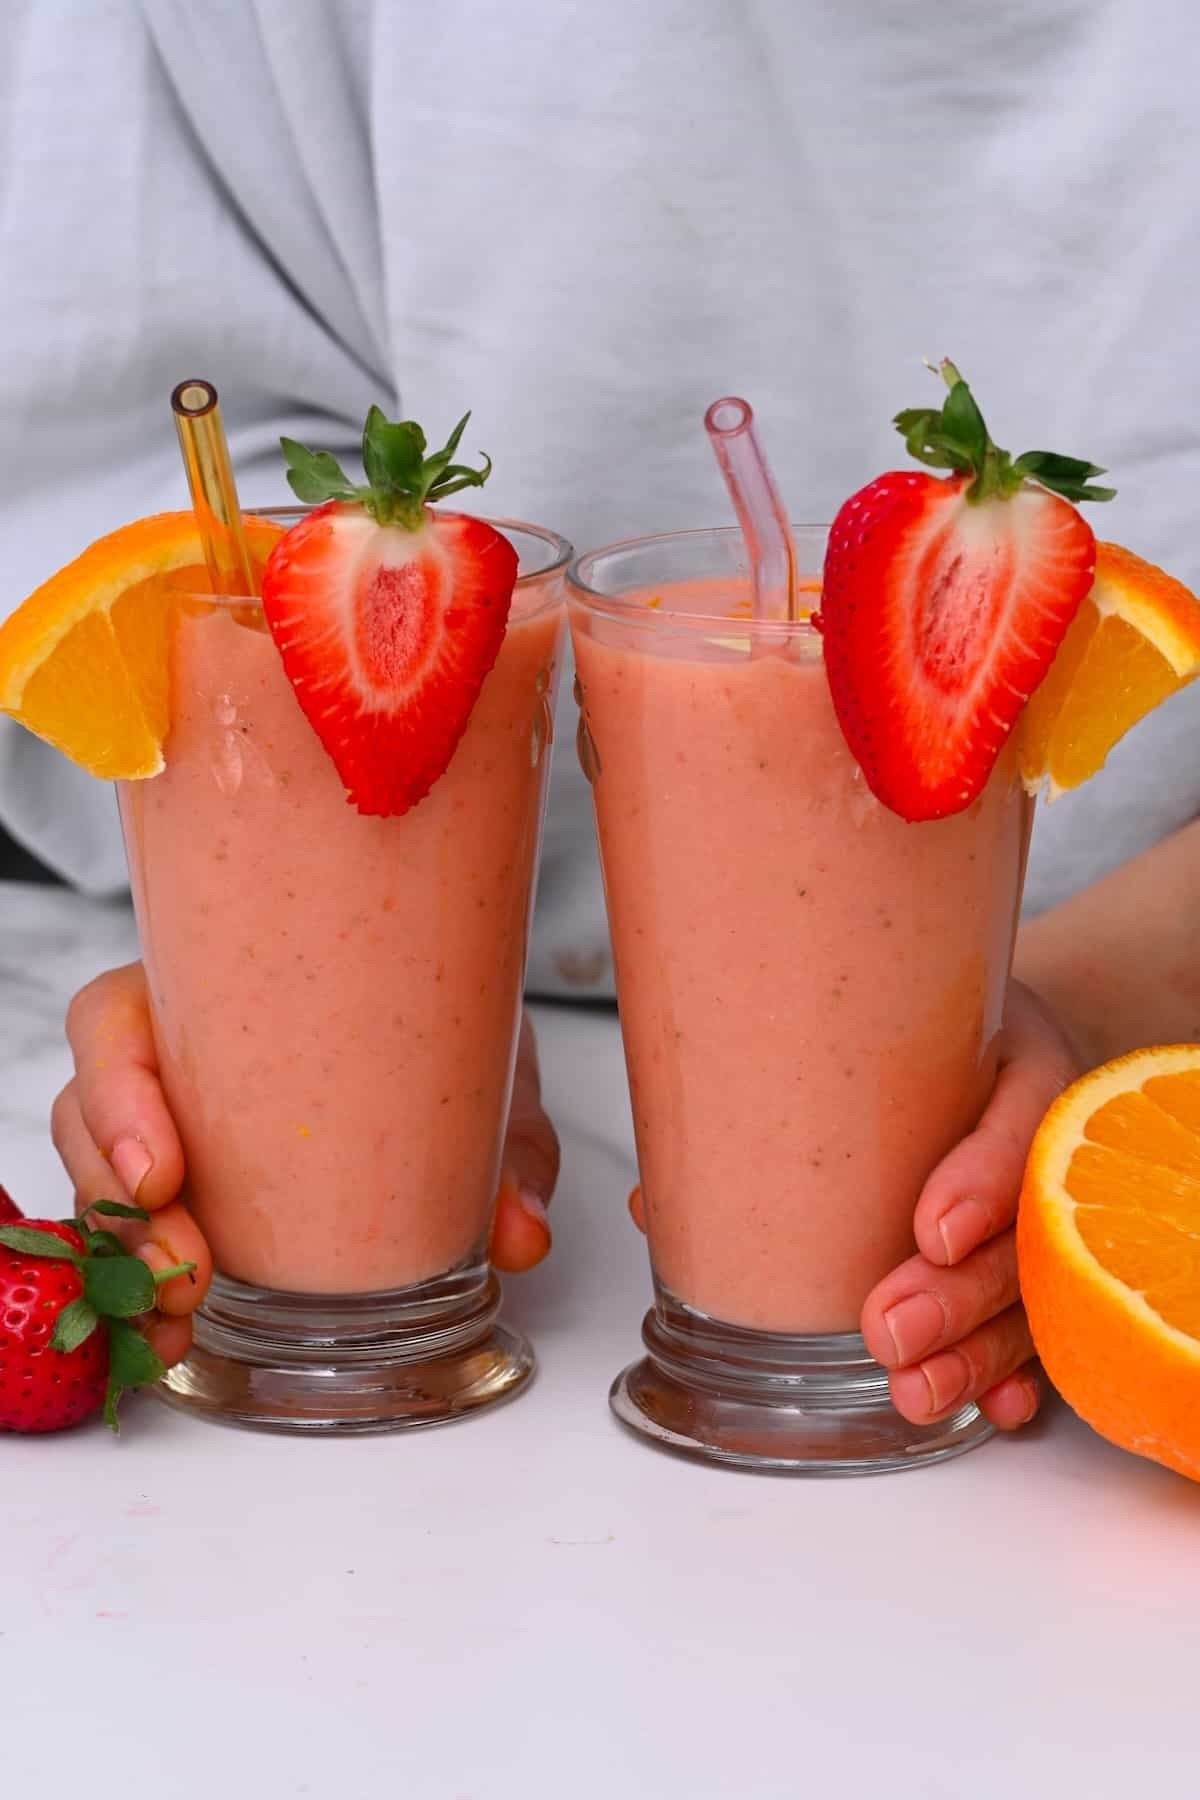 strawberry-banana-smoothie-main1.jpeg